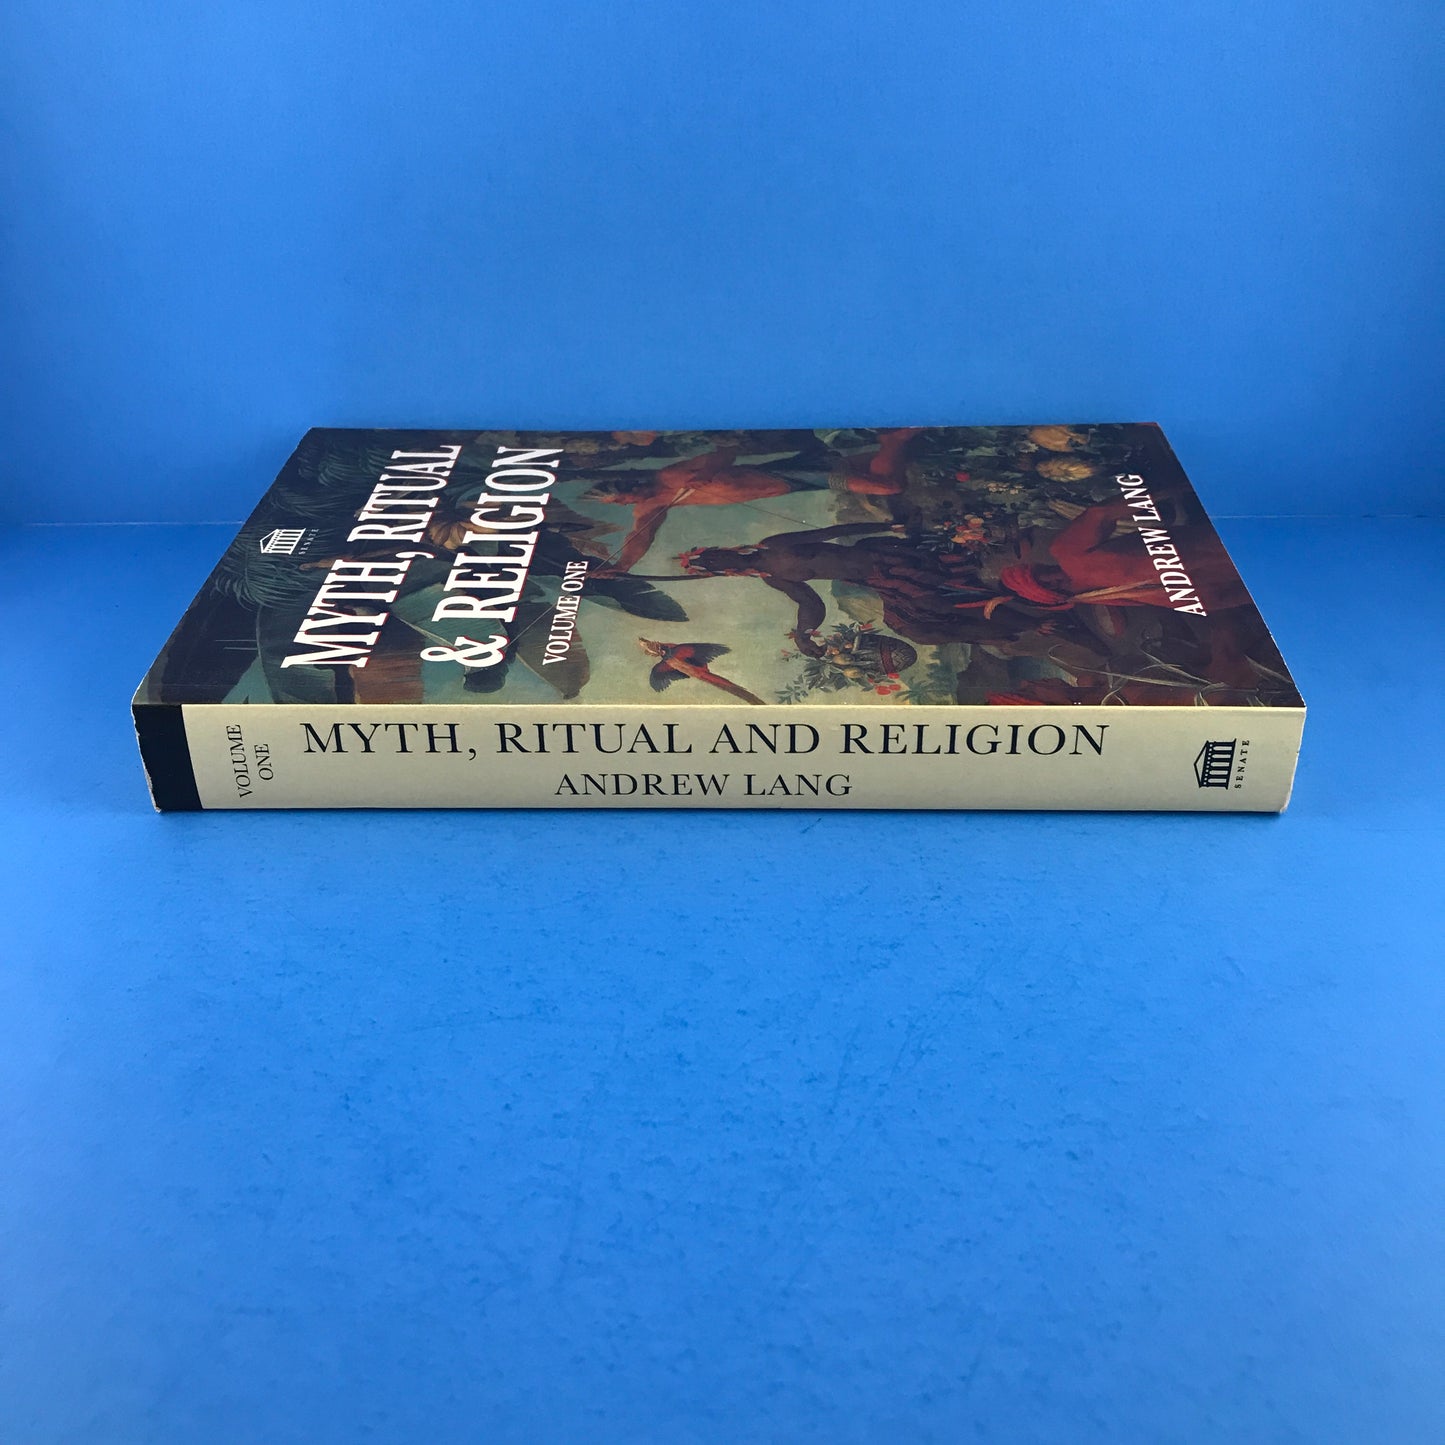 Myth, Ritual & Religion (Vol I)